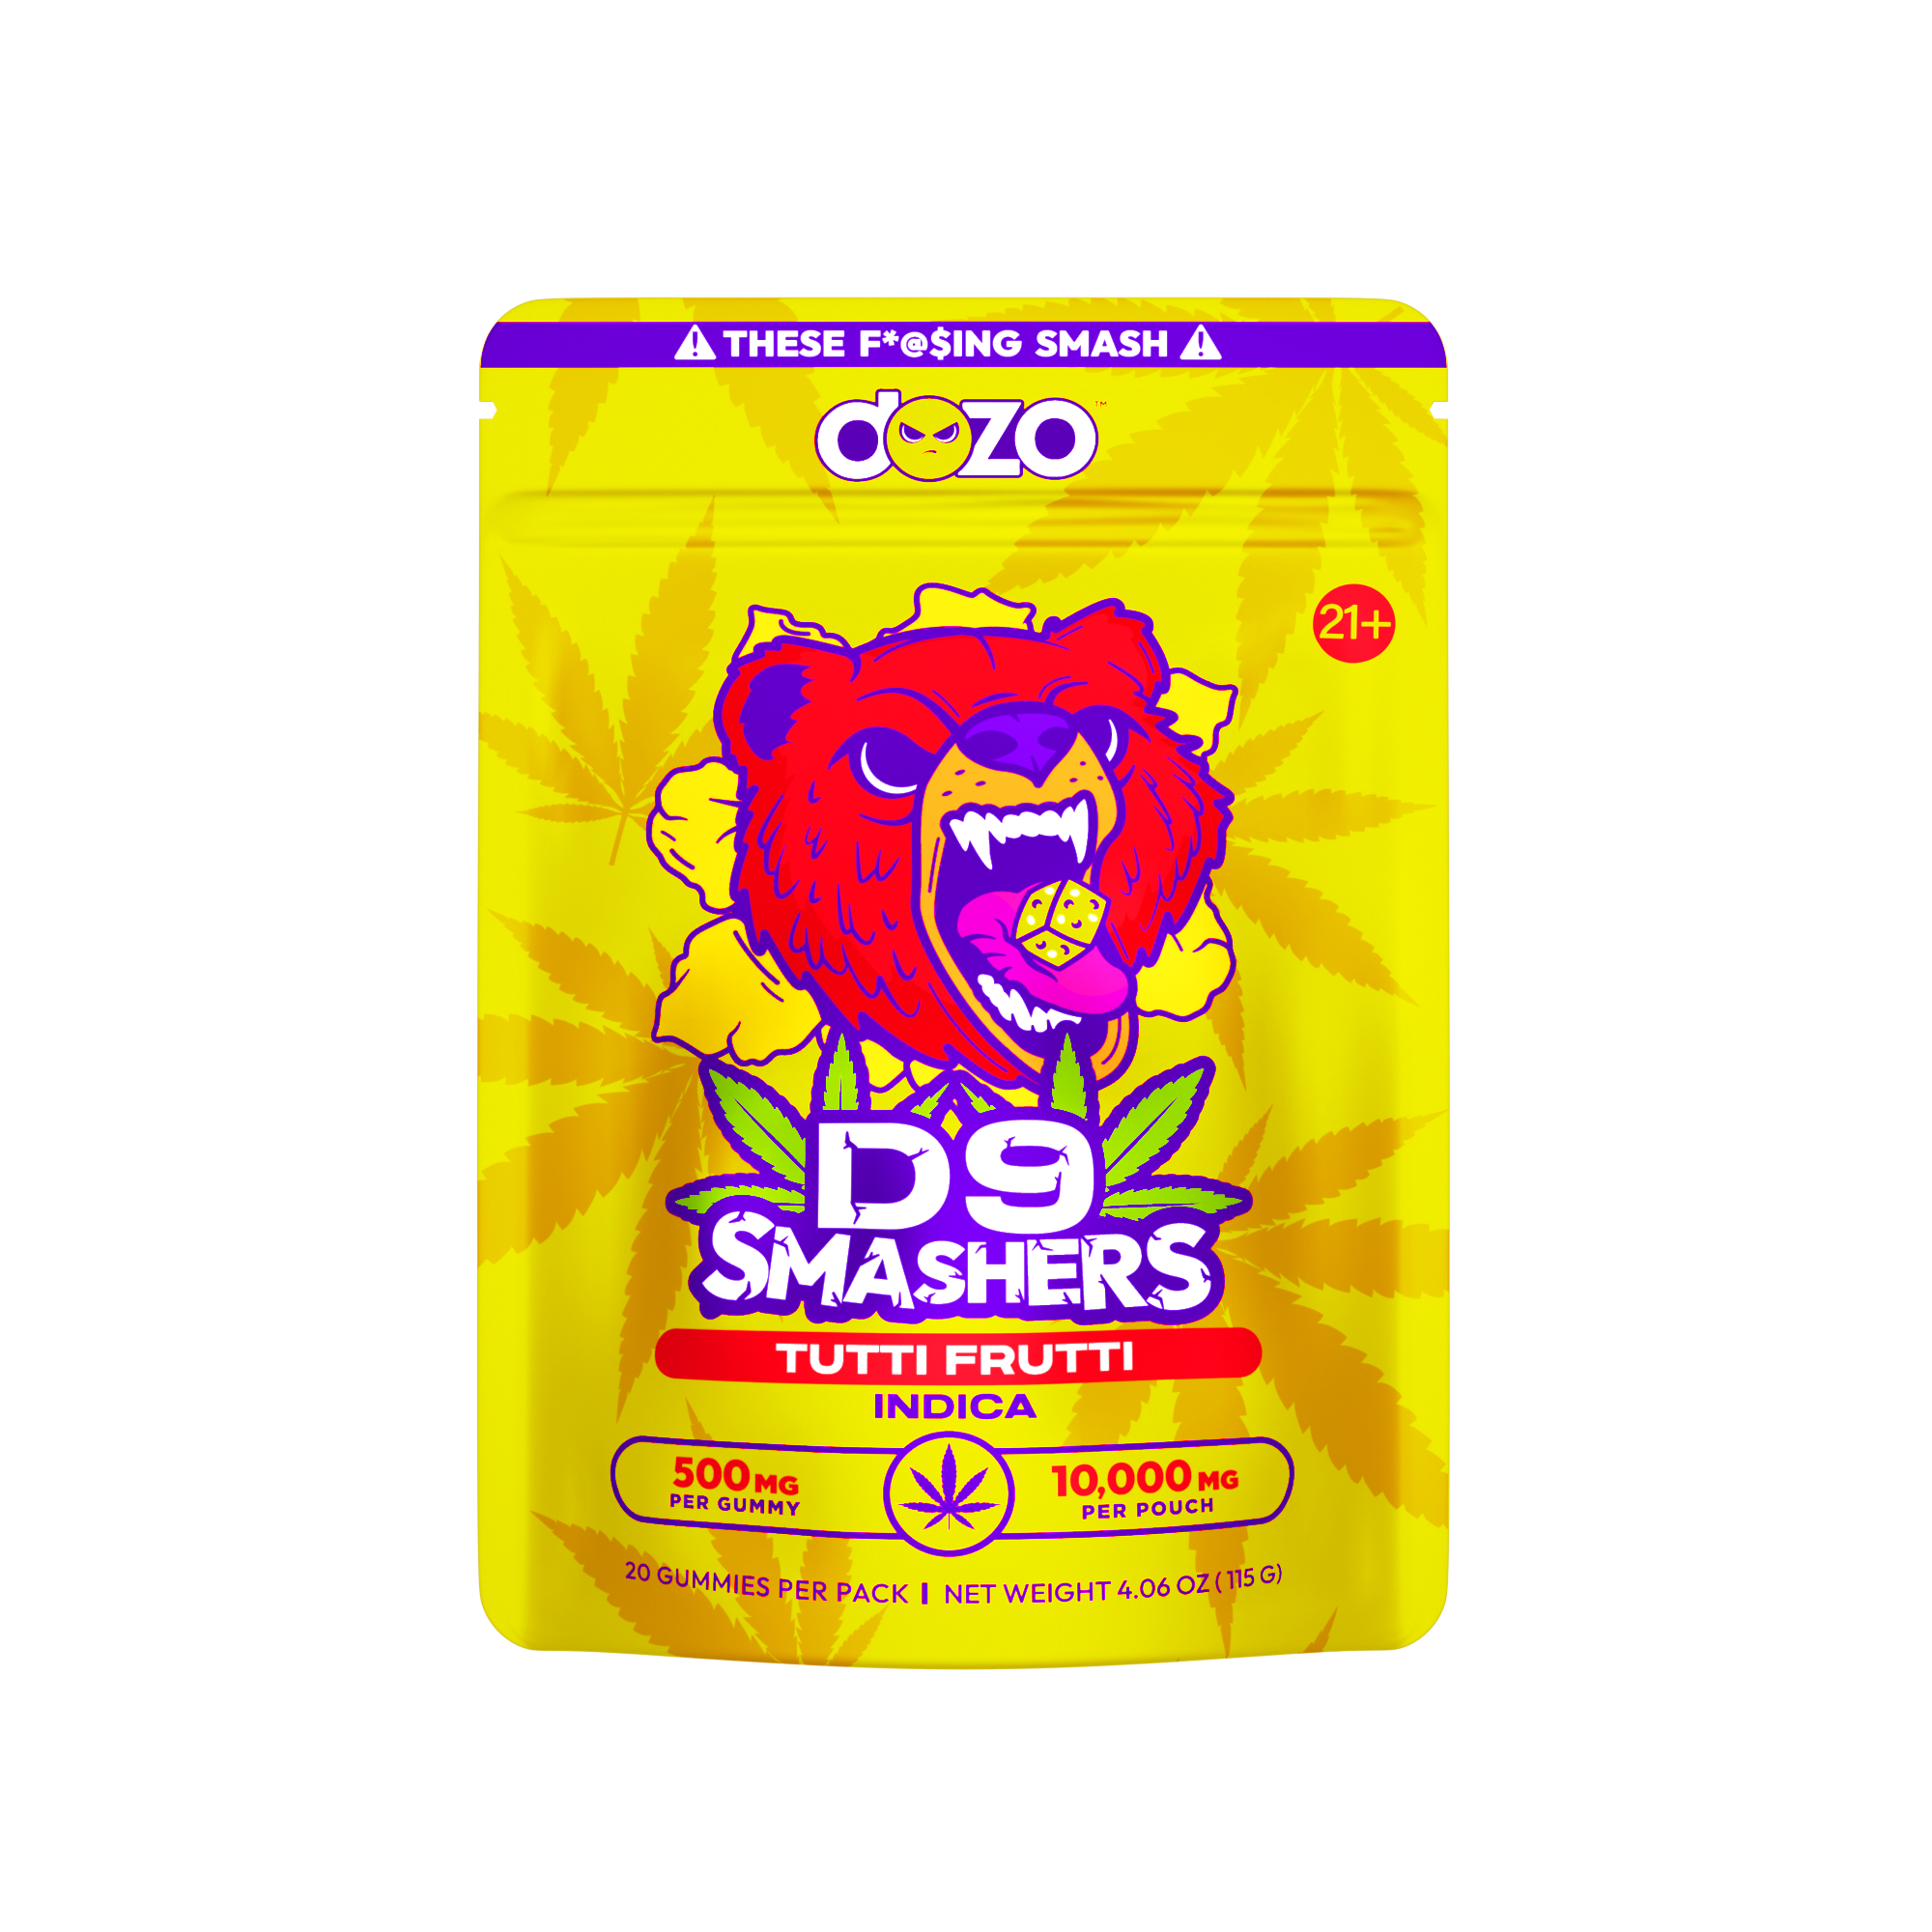 Dozo - 20ct. D9 Smashers Gummies - 500mg Cannabinoids/Gummy  (5ct Display)